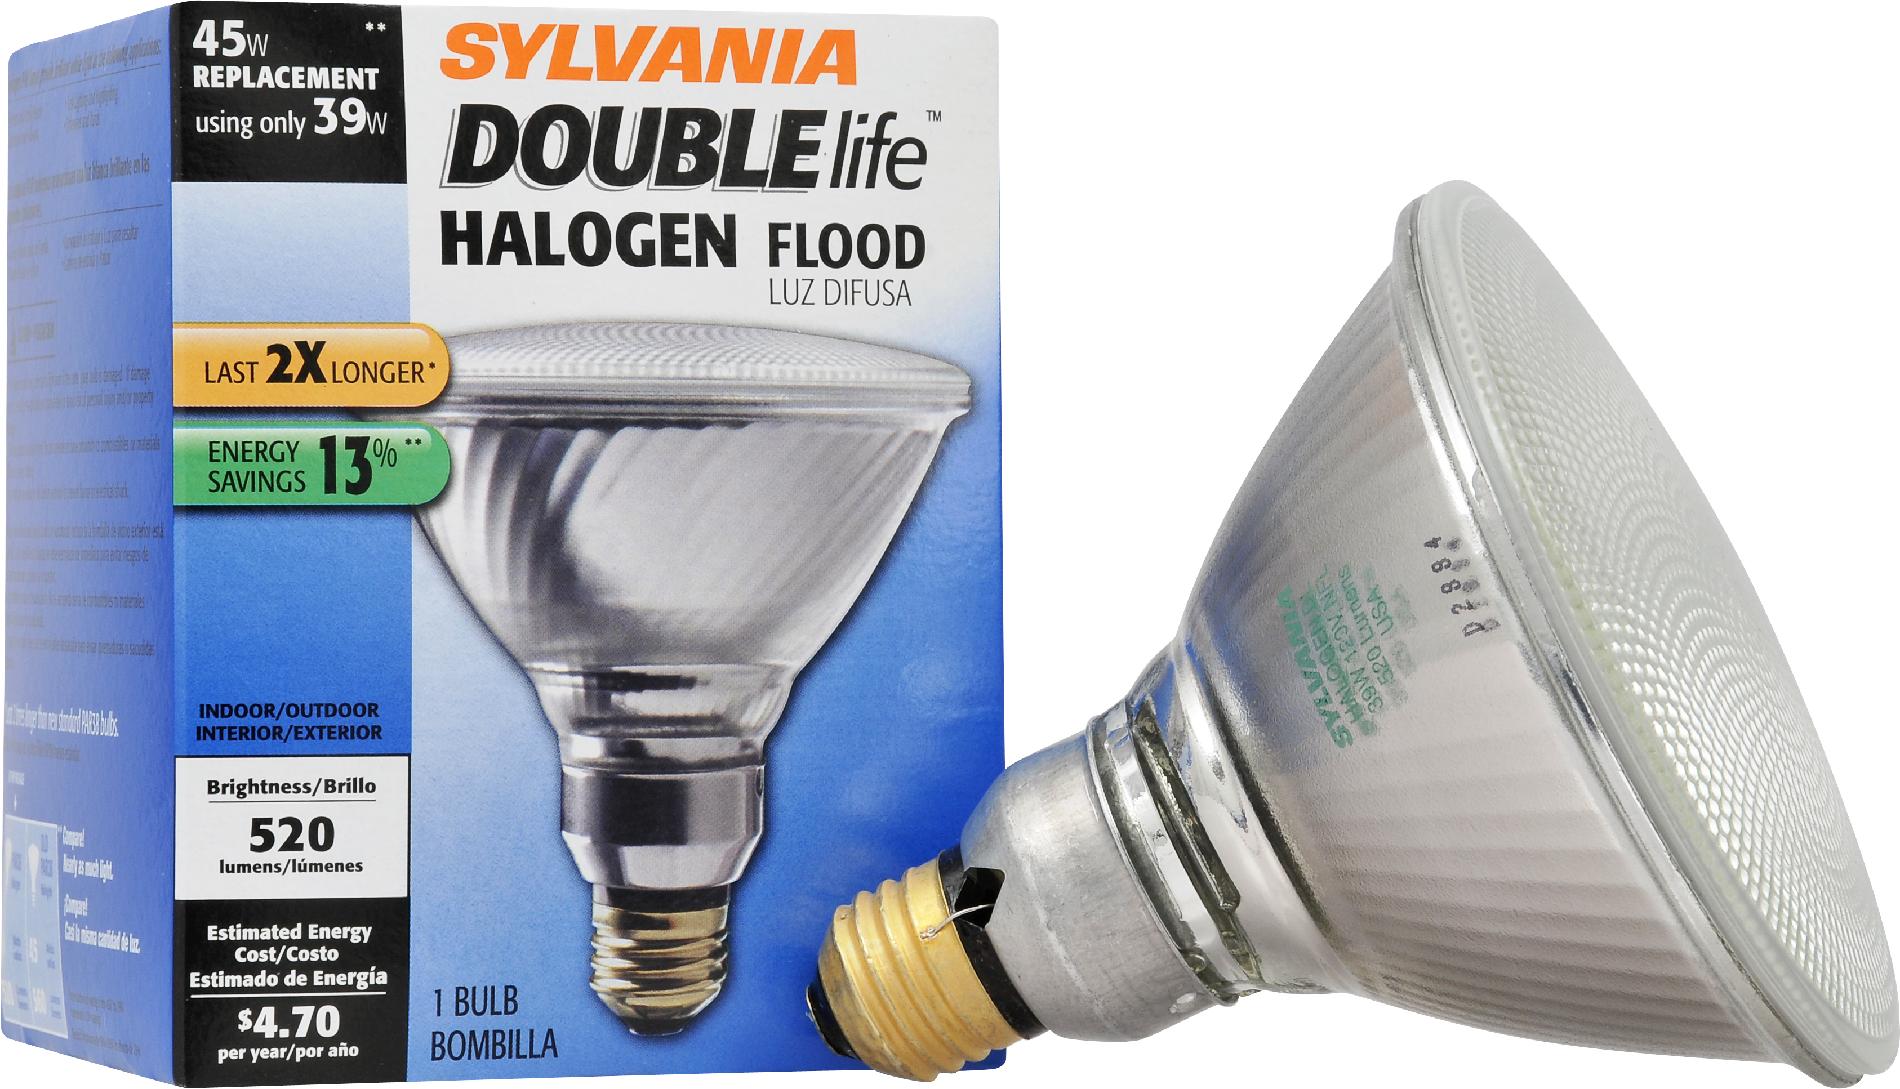 Sylvania Halogen Narrow Flood Lamp PAR38-Medium Base 120V Light Bulb 39W Equivalent 55W DOUBLElife - Single Bulb